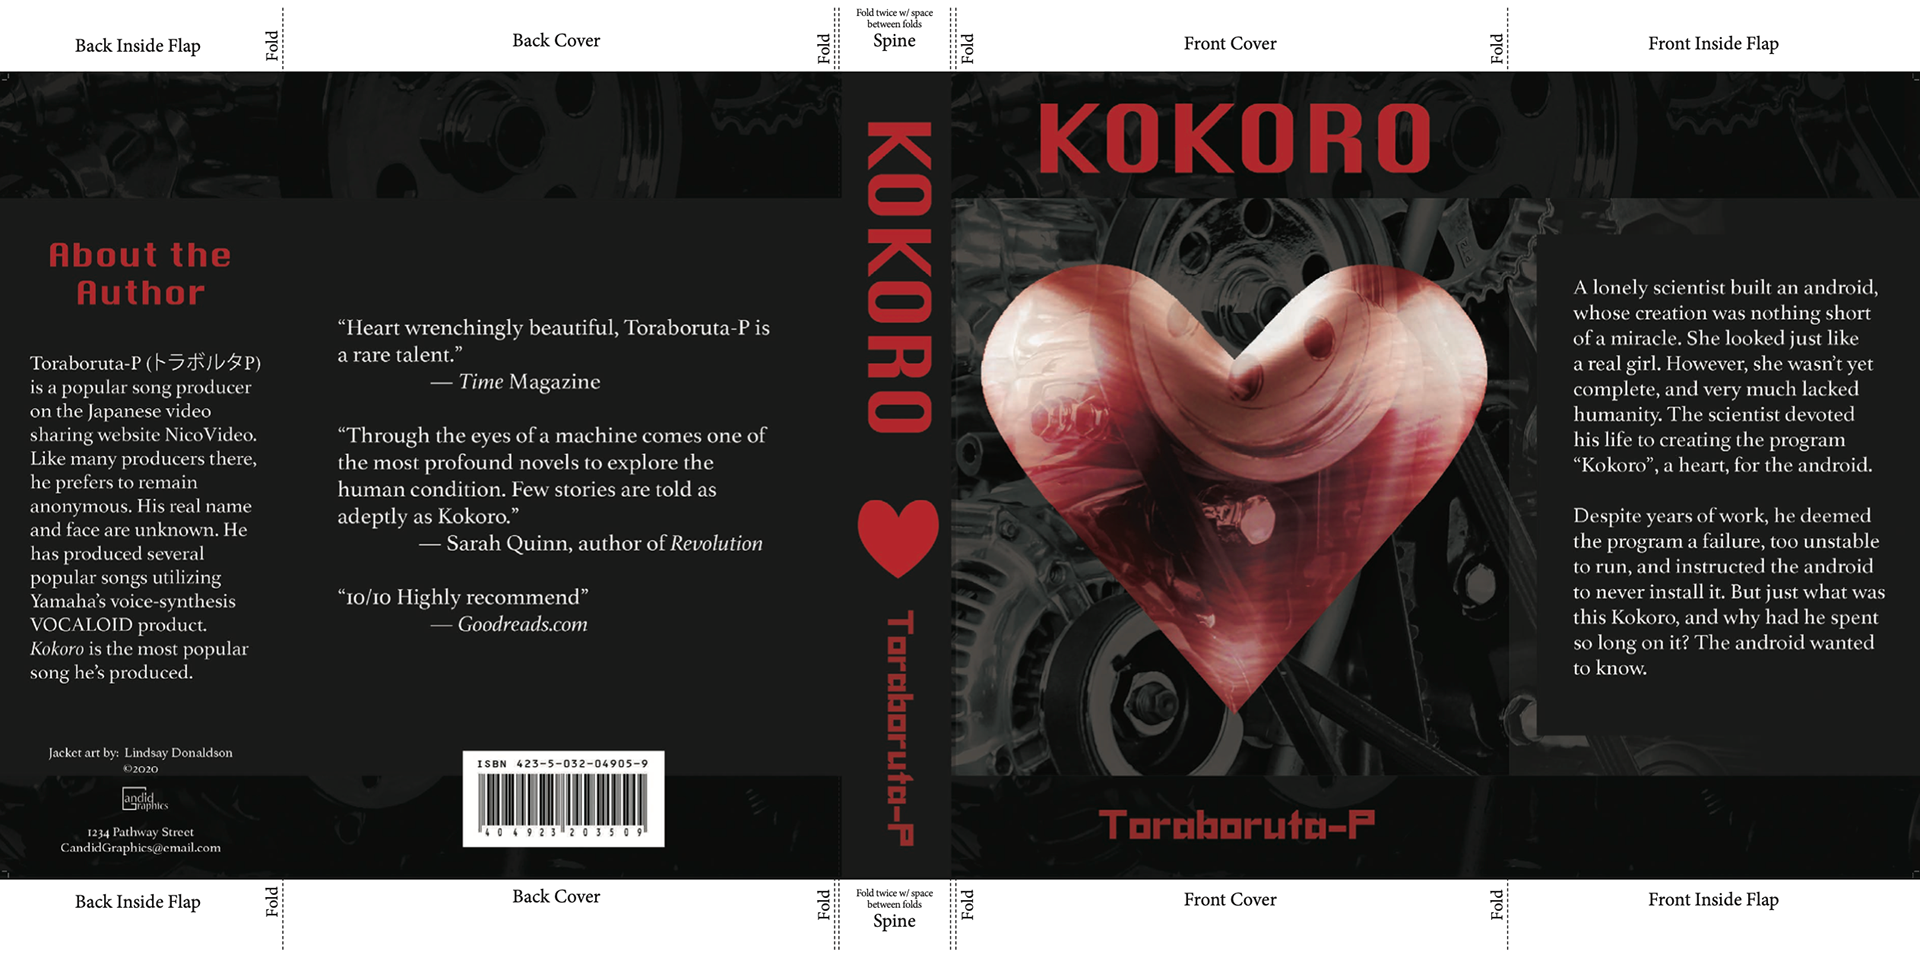 Meaning of Kokoro by Toraboruta